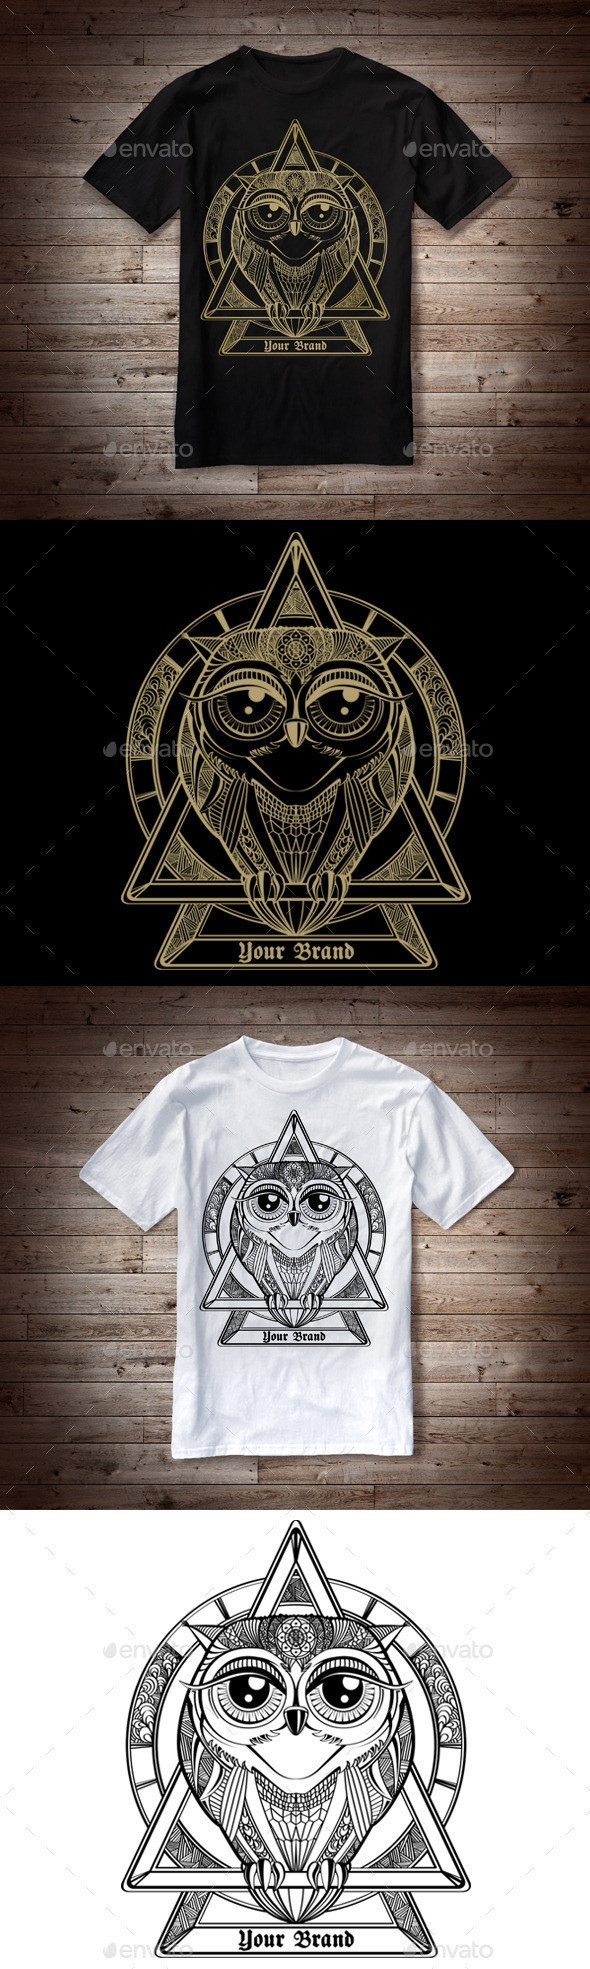 Owl bw tshirts preview